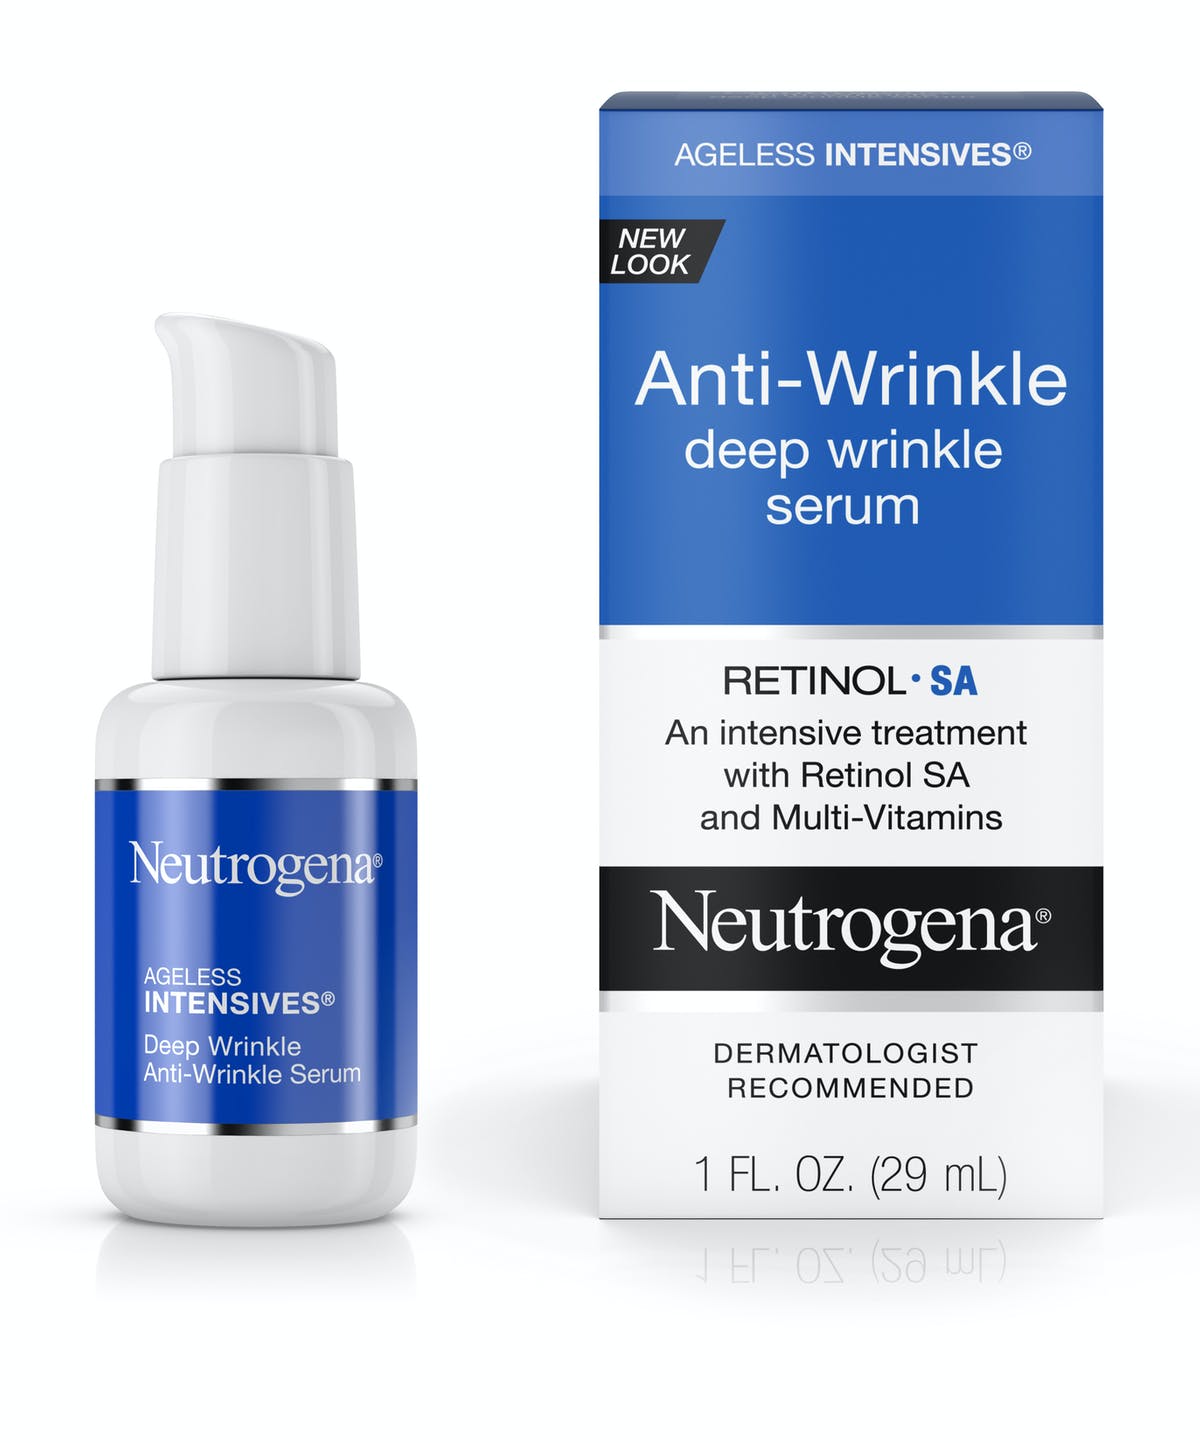 Neutrogena anti-ageing skincare review